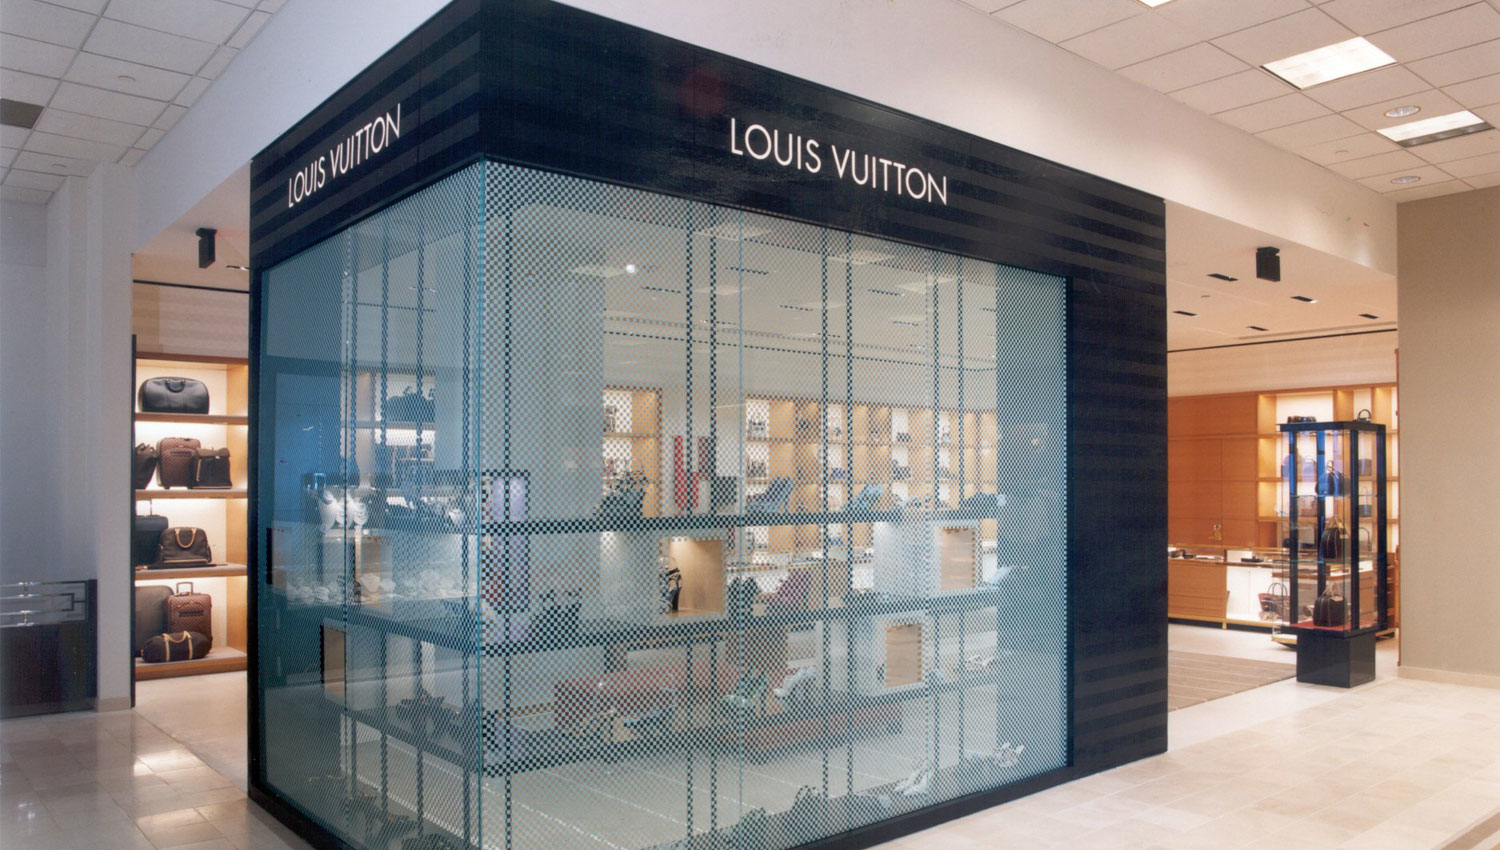 Louis Vuitton McLean Neiman Marcus Tysons Corner Coupons near me in McLean, VA 22102 | 8coupons